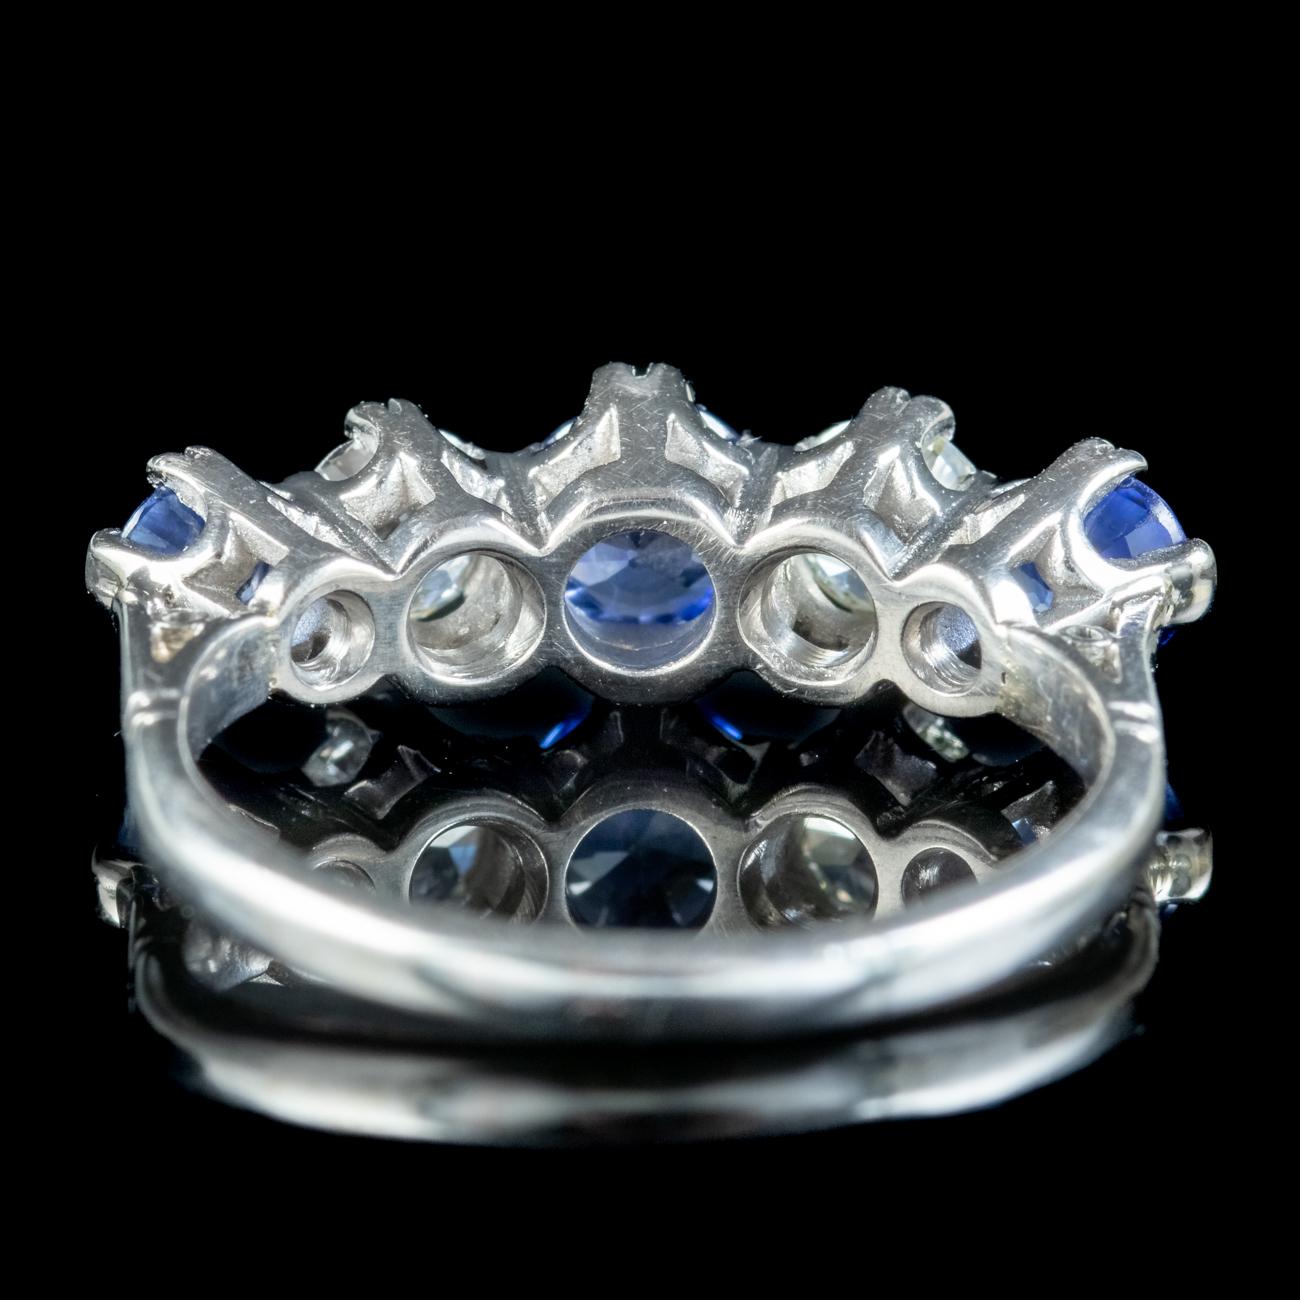 5 stone diamond and sapphire ring